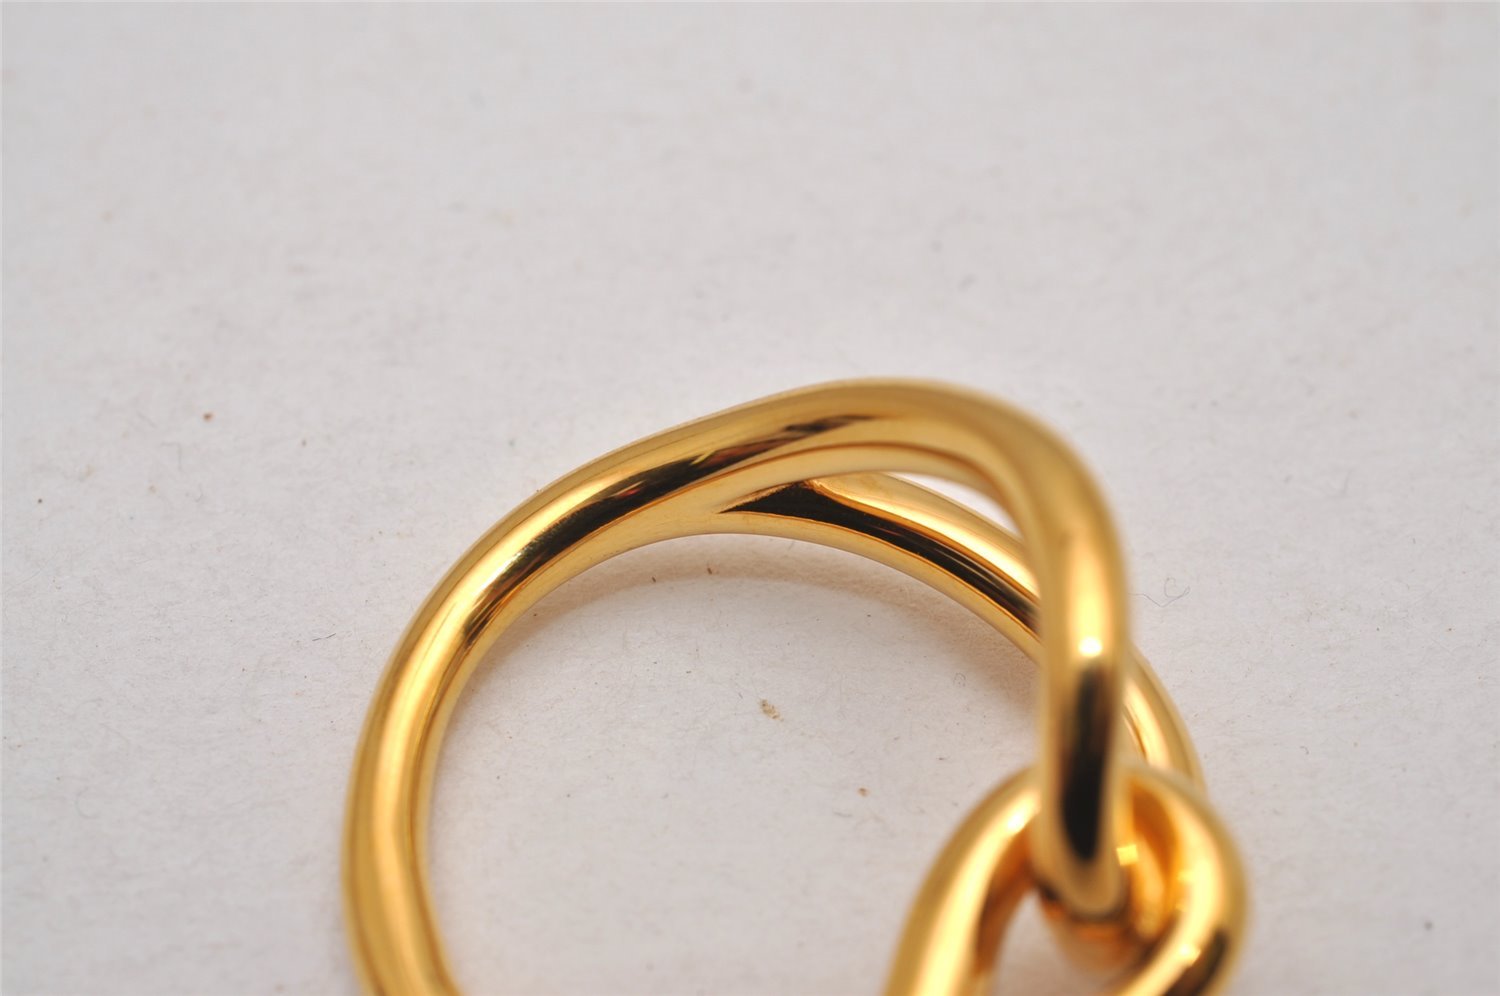 Authentic HERMES Scarf Ring Jumbo Circle Design Gold Tone 8974I